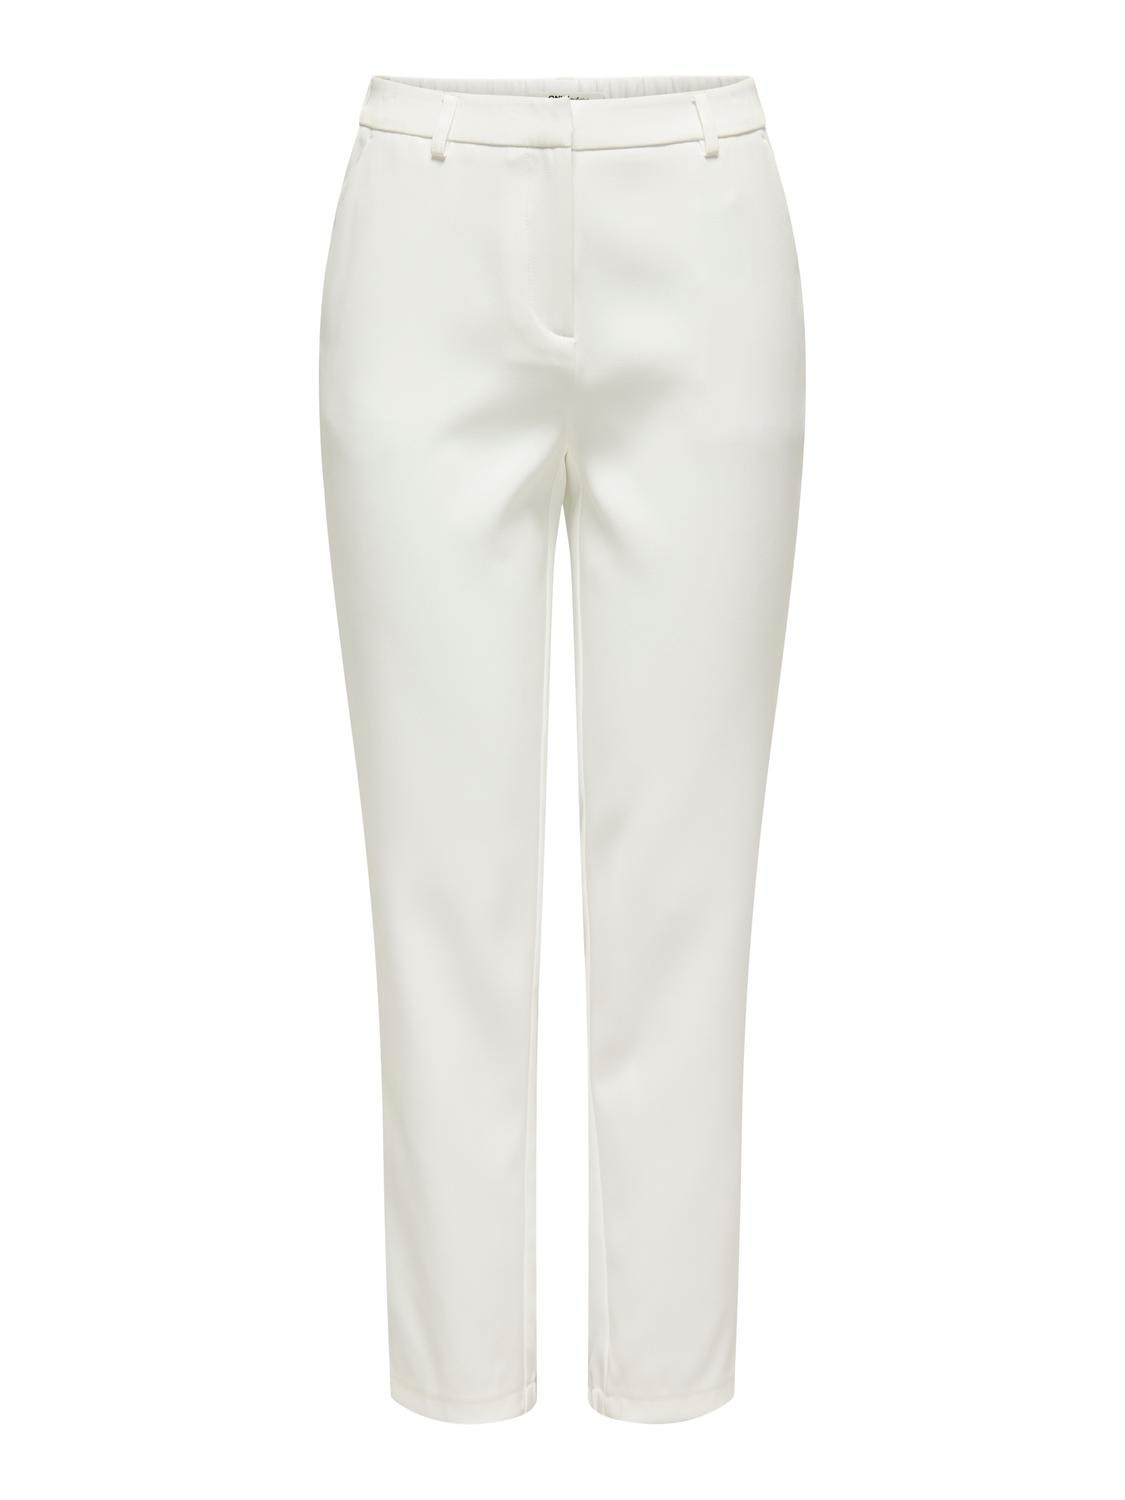 ONLY Normal geschnitten Mittlere Taille Hose -Bright White - 15311117